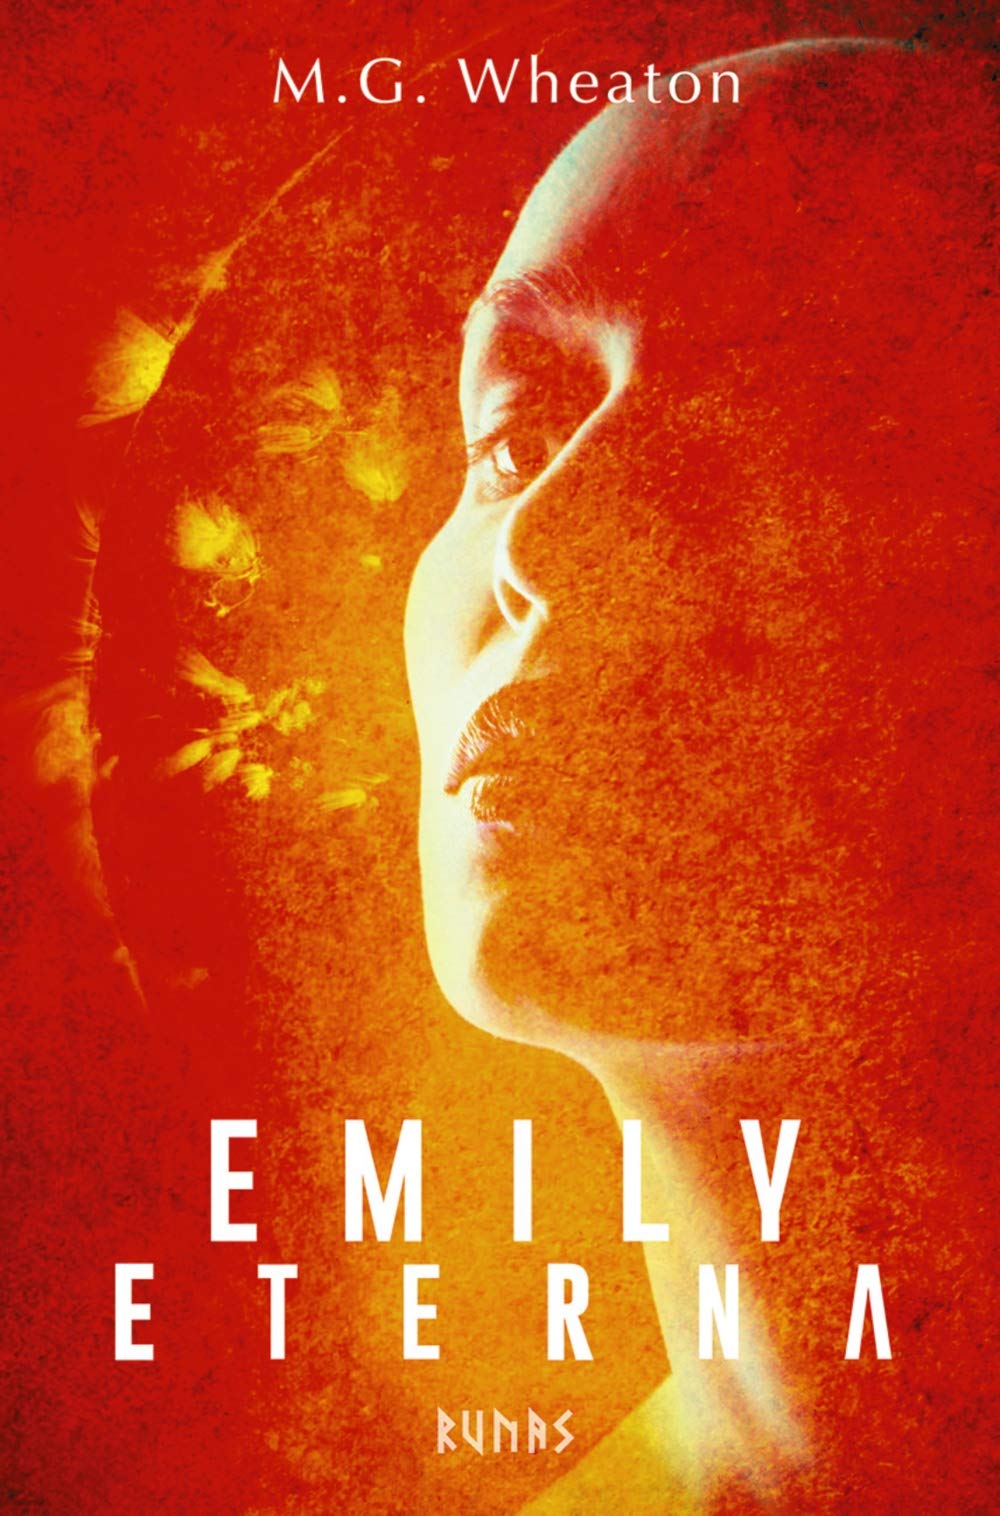 Emily Eterna by M.G. Wheaton